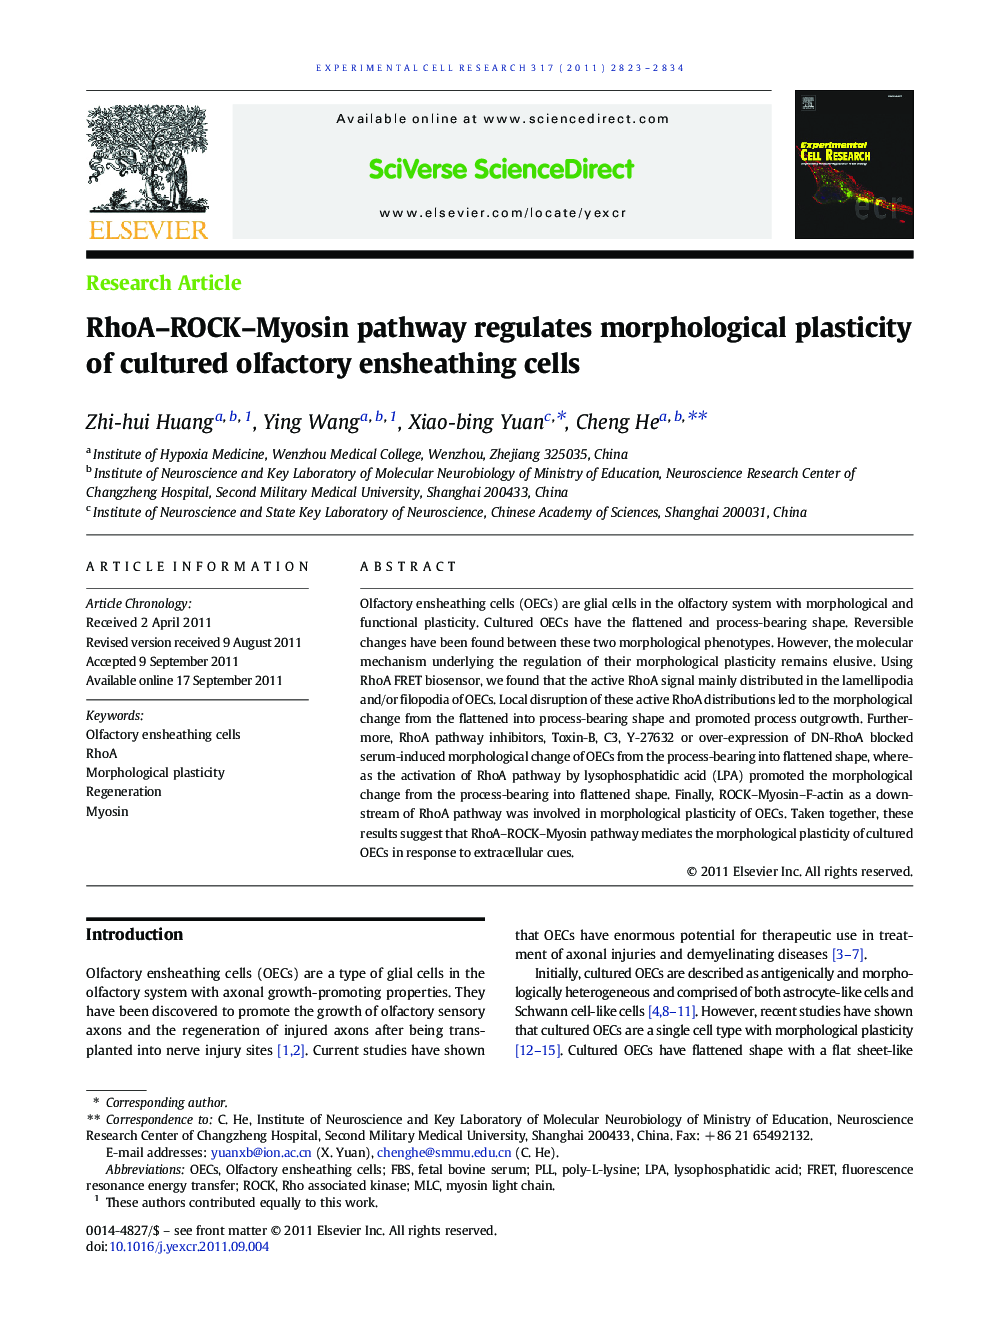 RhoA–ROCK–Myosin pathway regulates morphological plasticity of cultured olfactory ensheathing cells